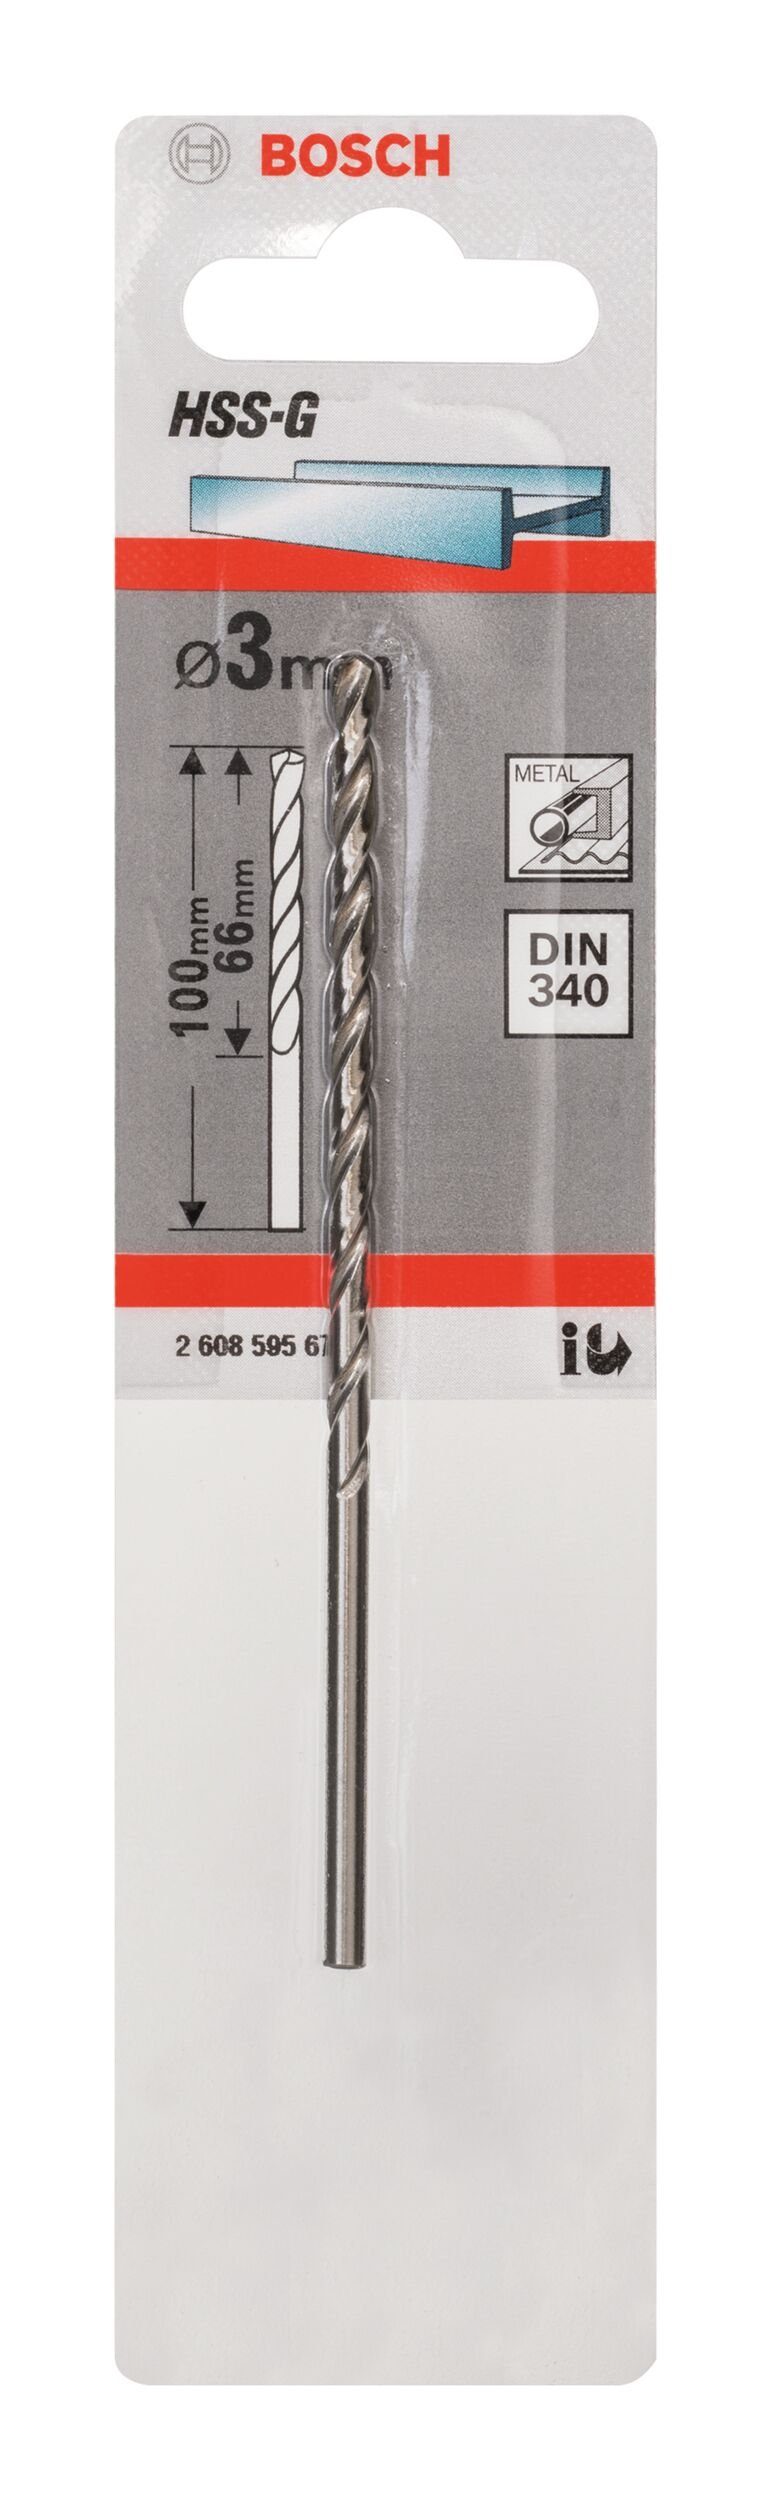 66 HSS-G BOSCH Metallbohrer, mm (DIN x 100 - 3 1er-Pack x 340) -